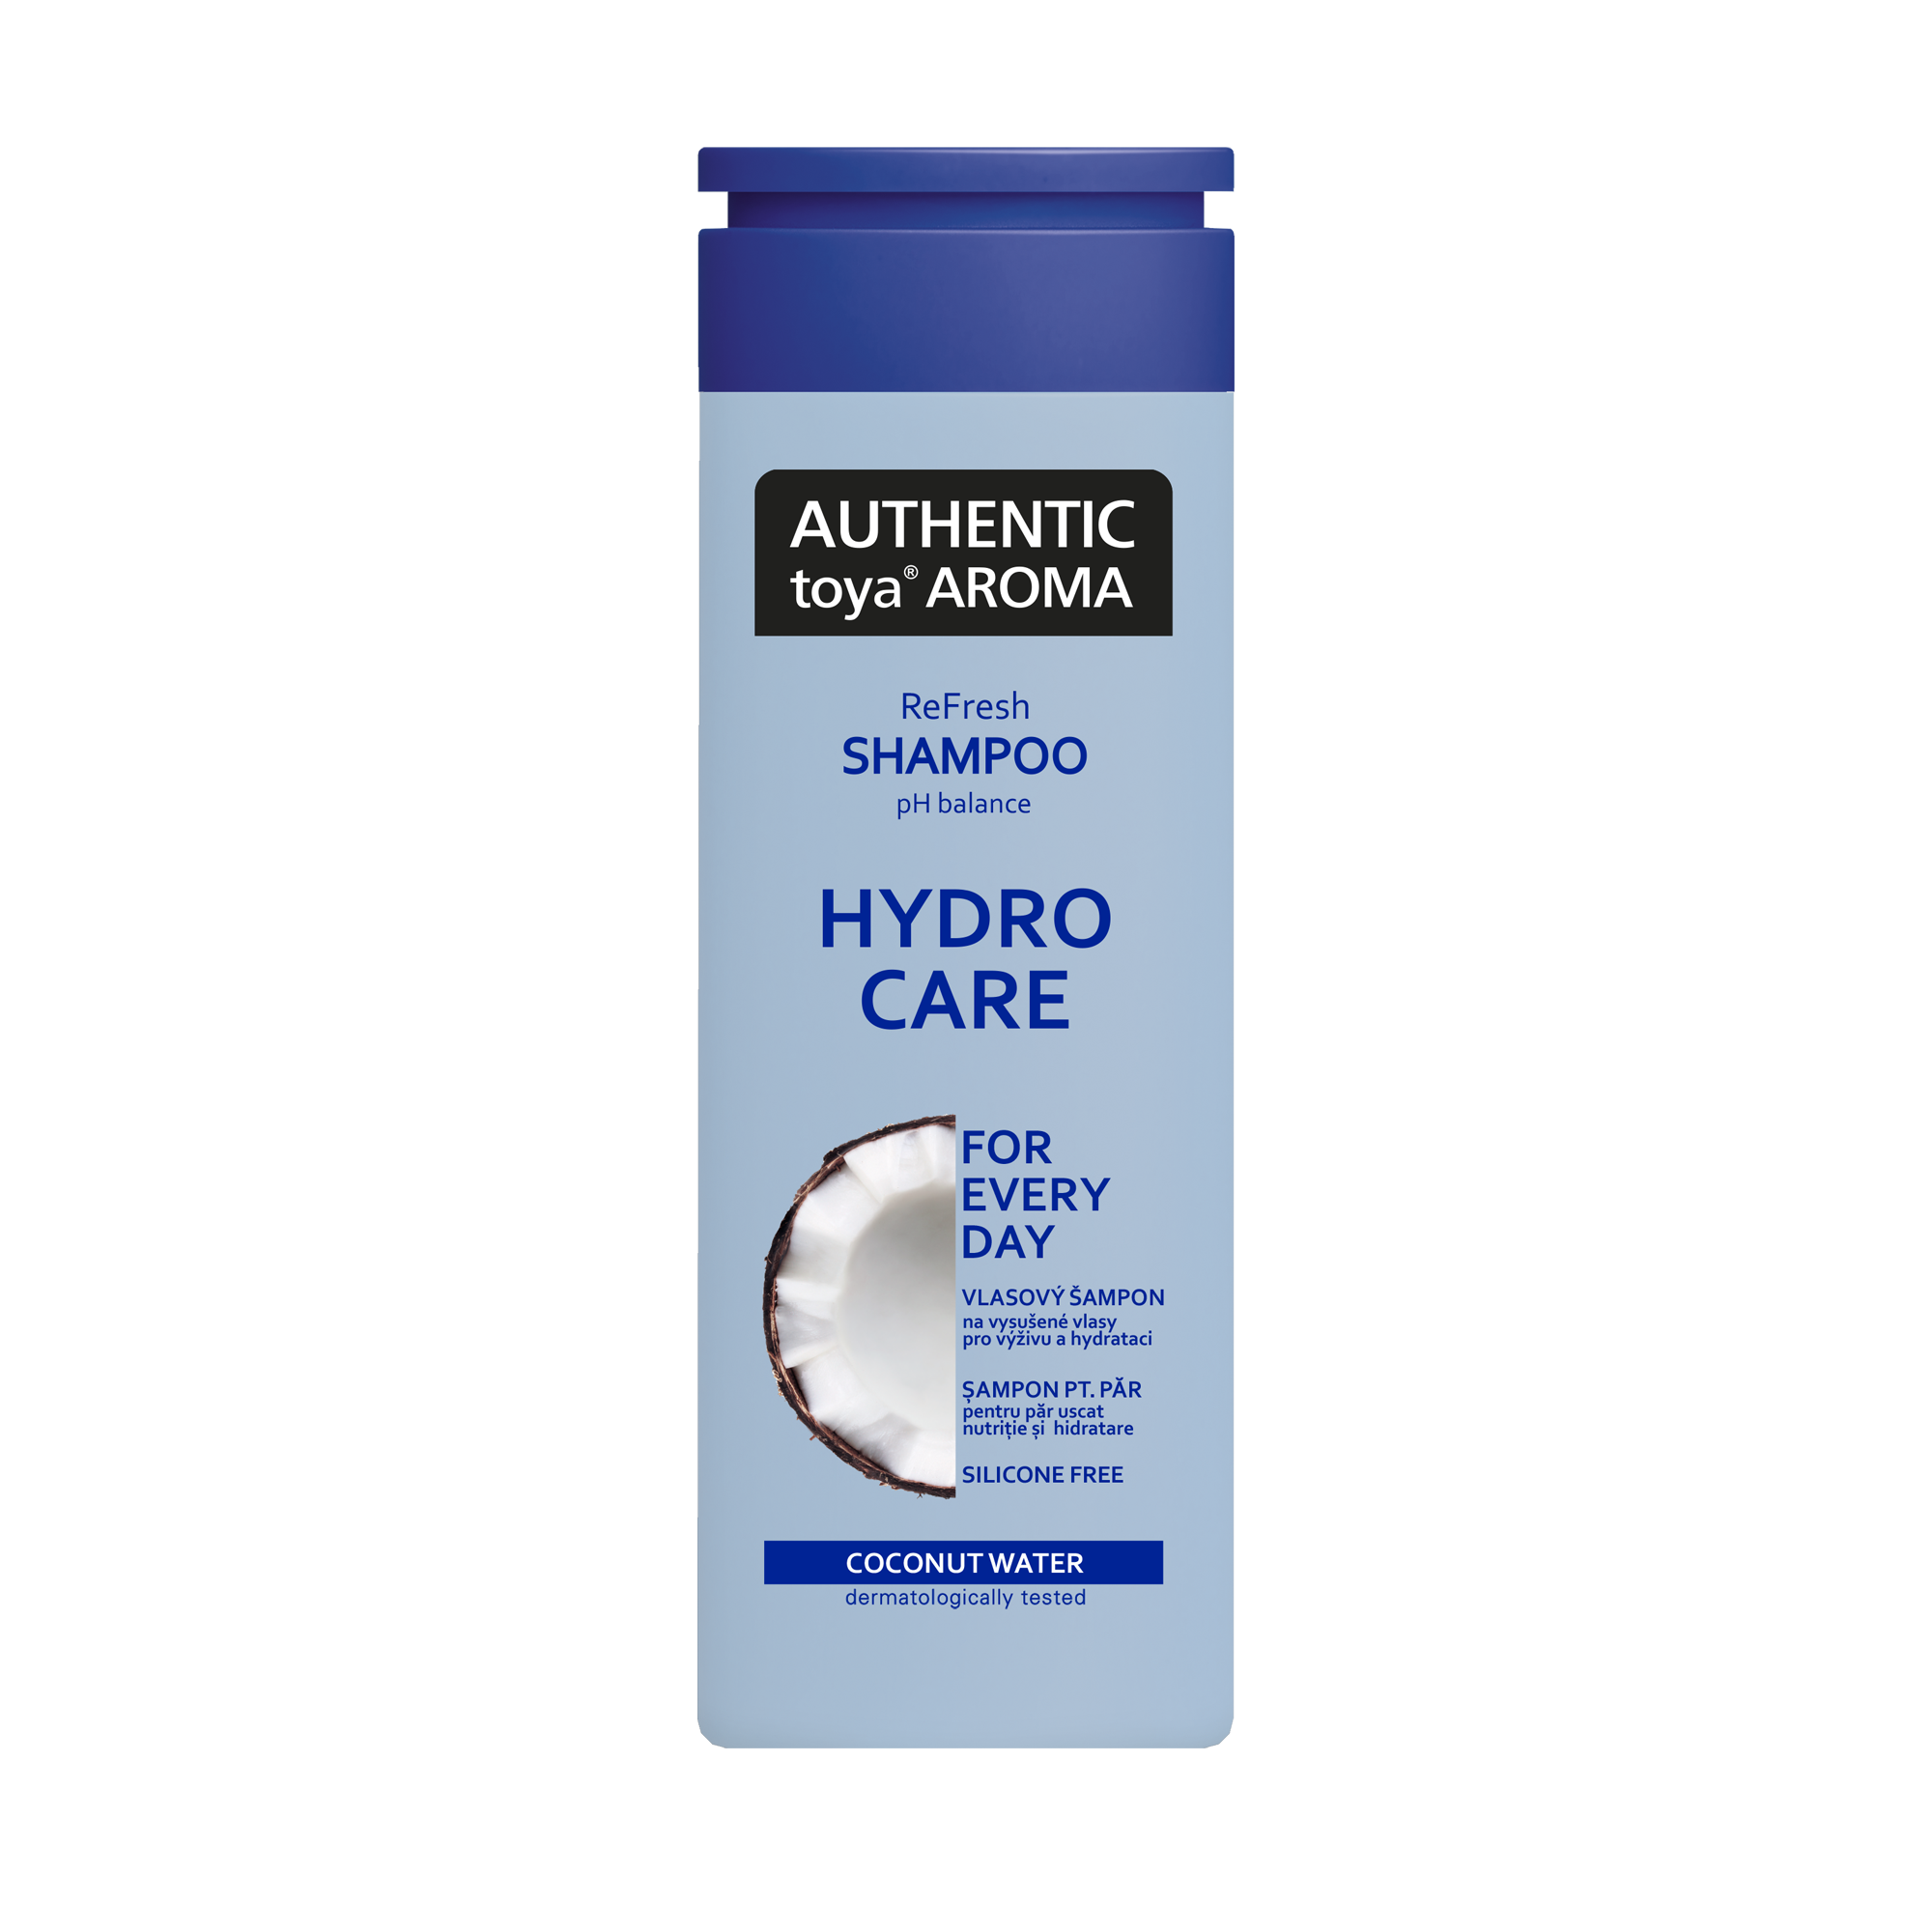 AUTHENTIC toya AROMA vlasový šampon Hydro Care